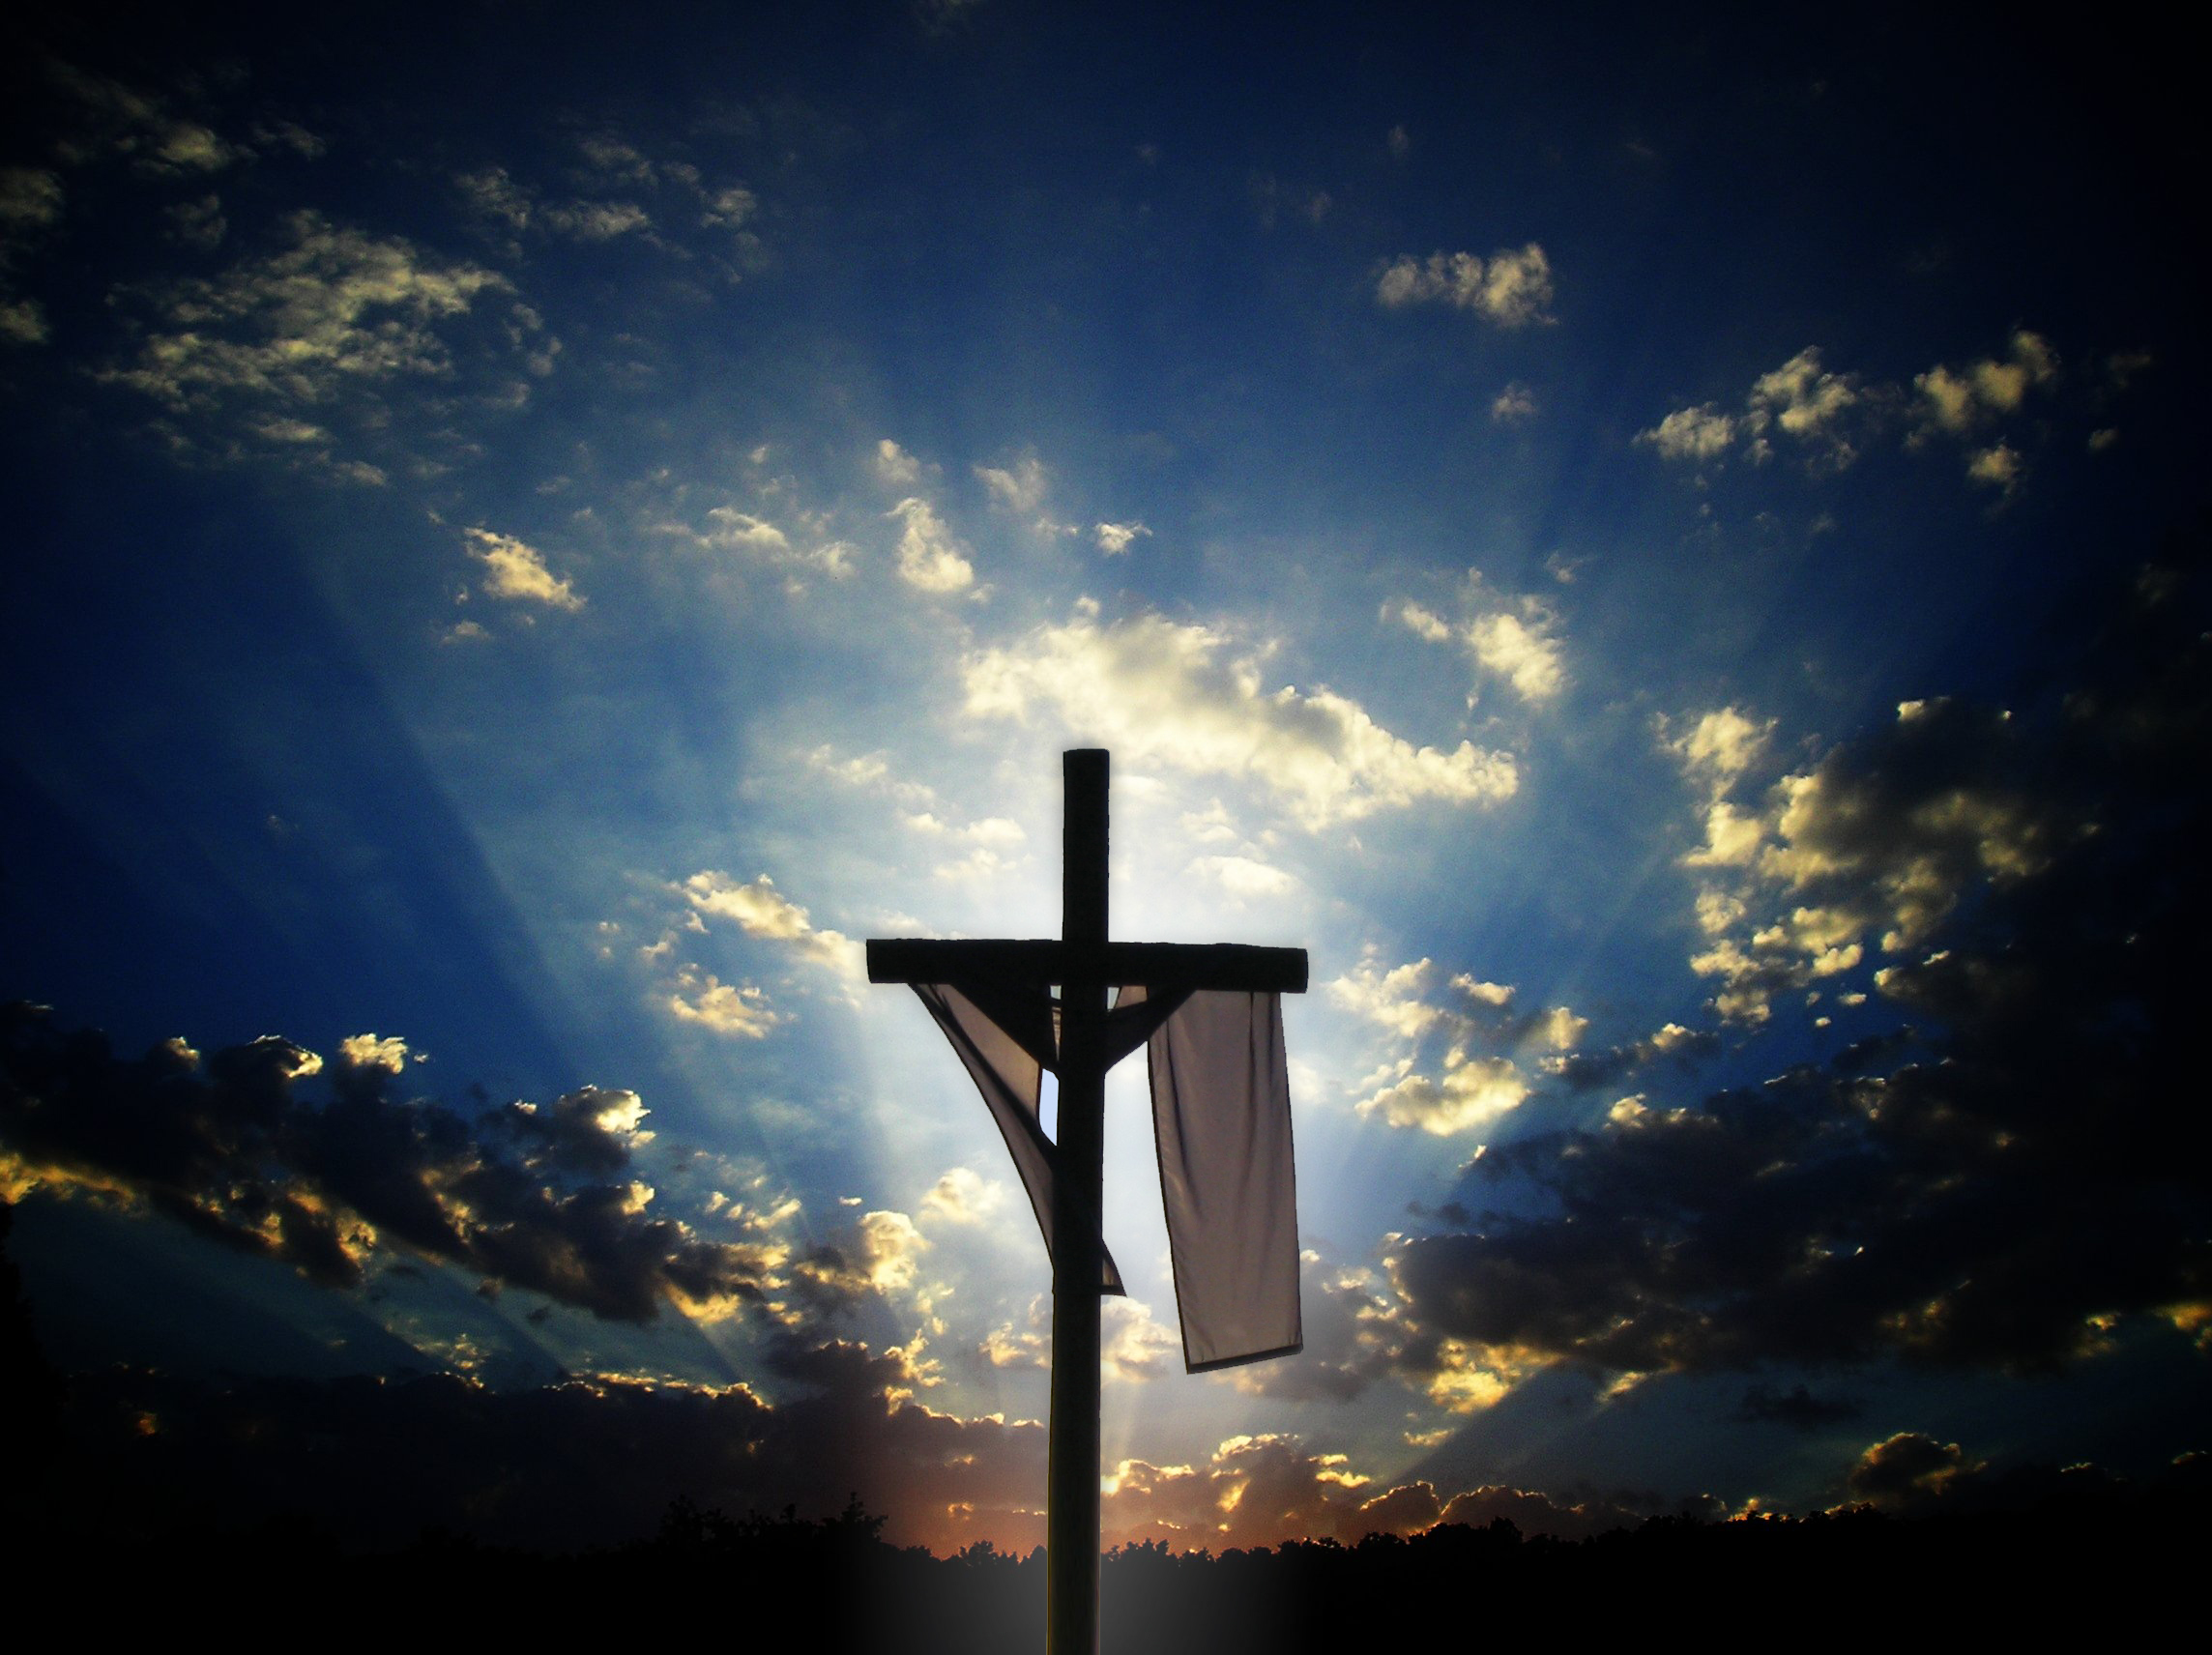 Jesus Cross Risen